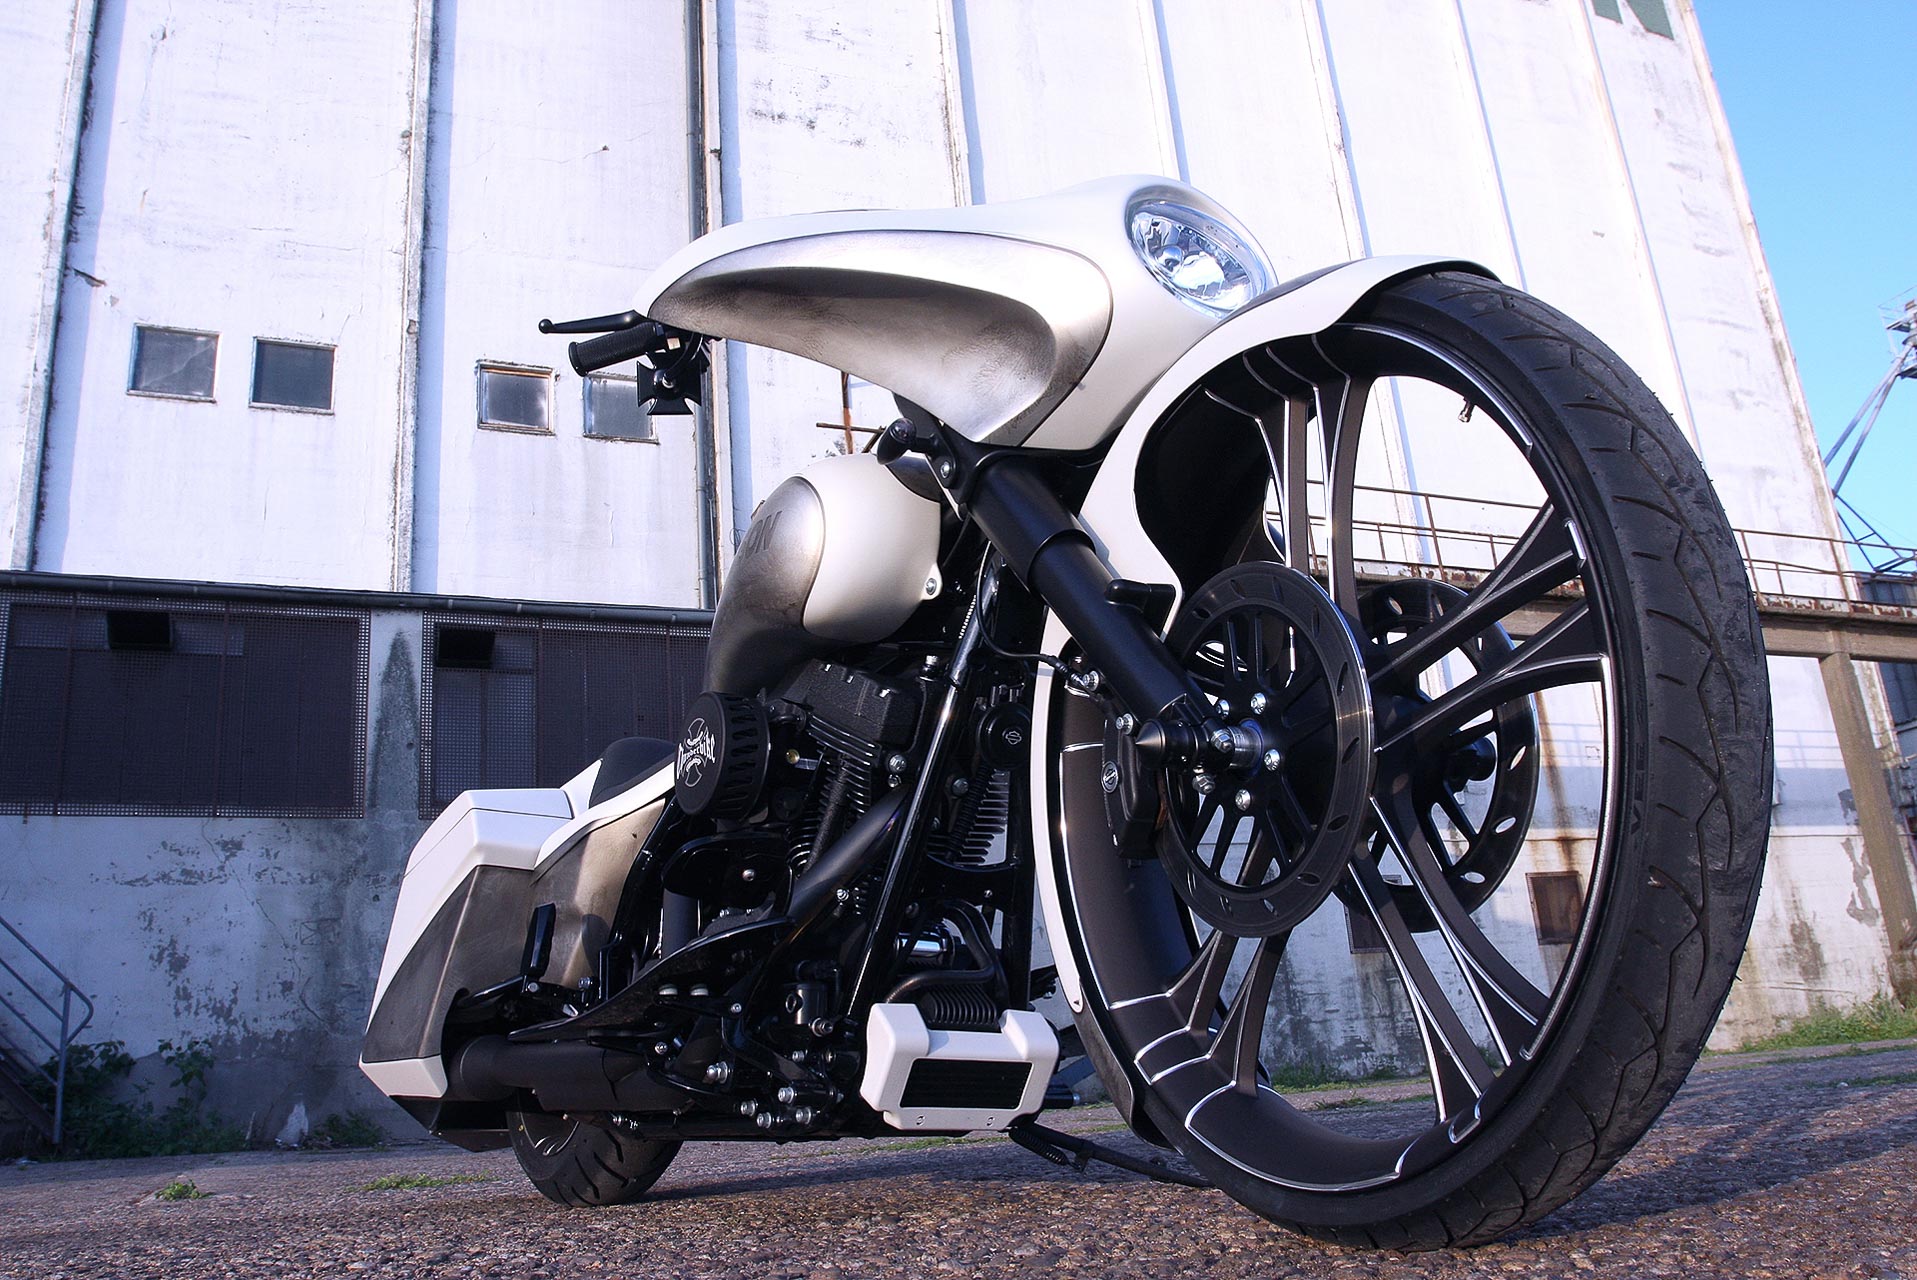 Customized Harley-Davidson Street Glide motorcycles by Thunderbike